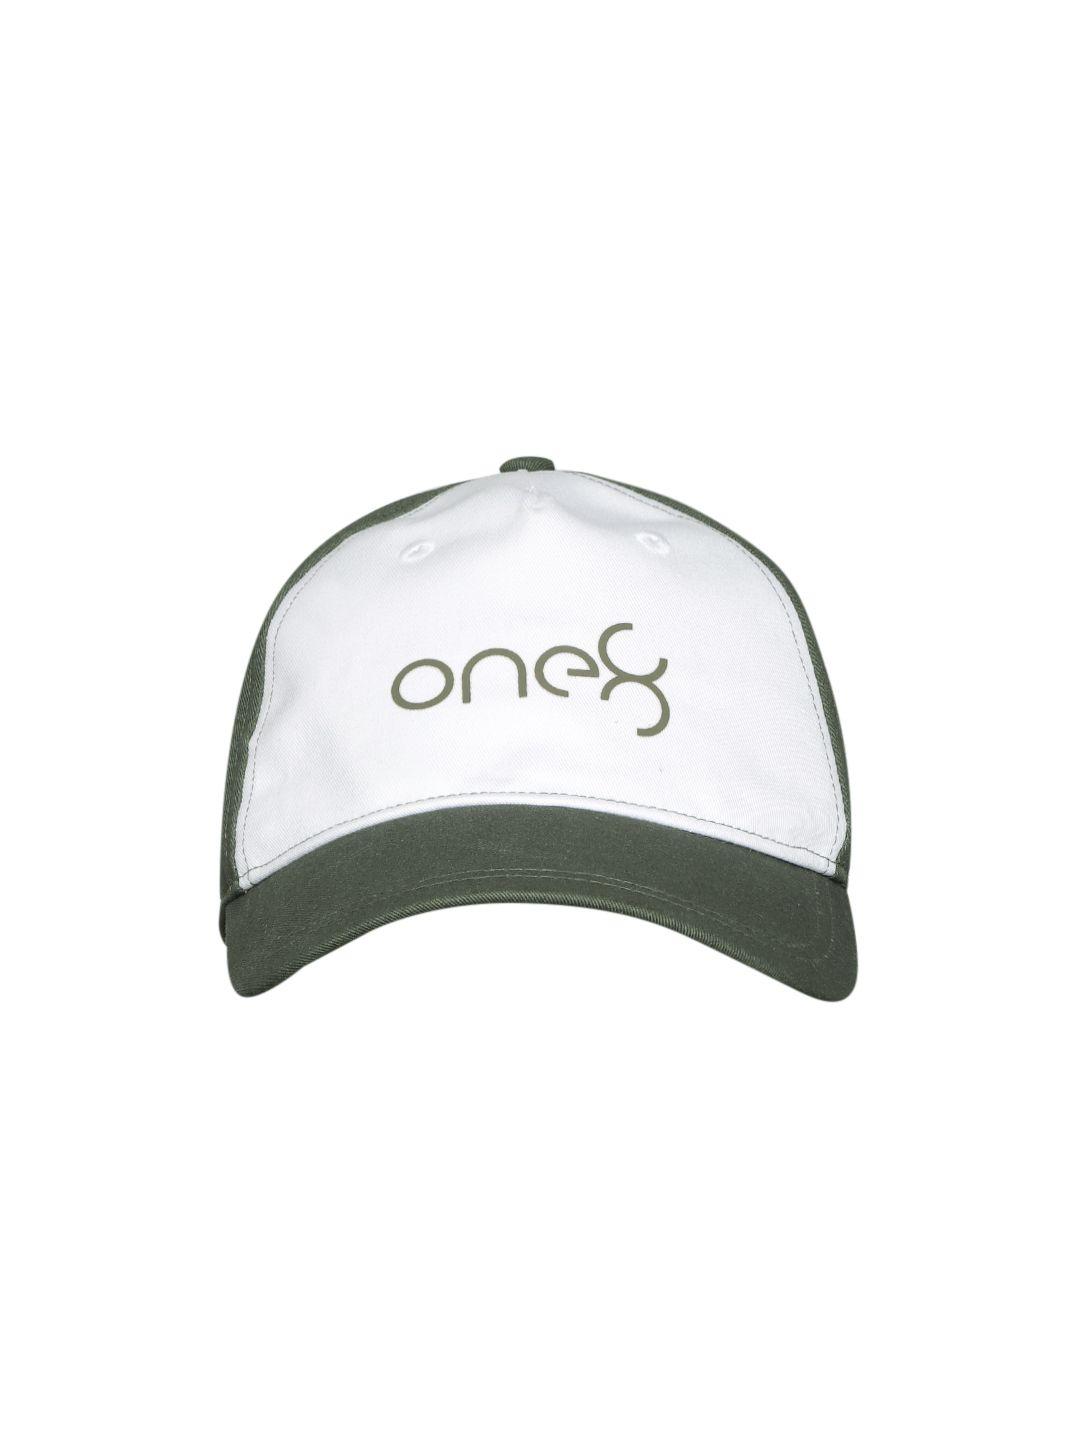 one8 x puma unisex green & white brand logo printed snapback cap